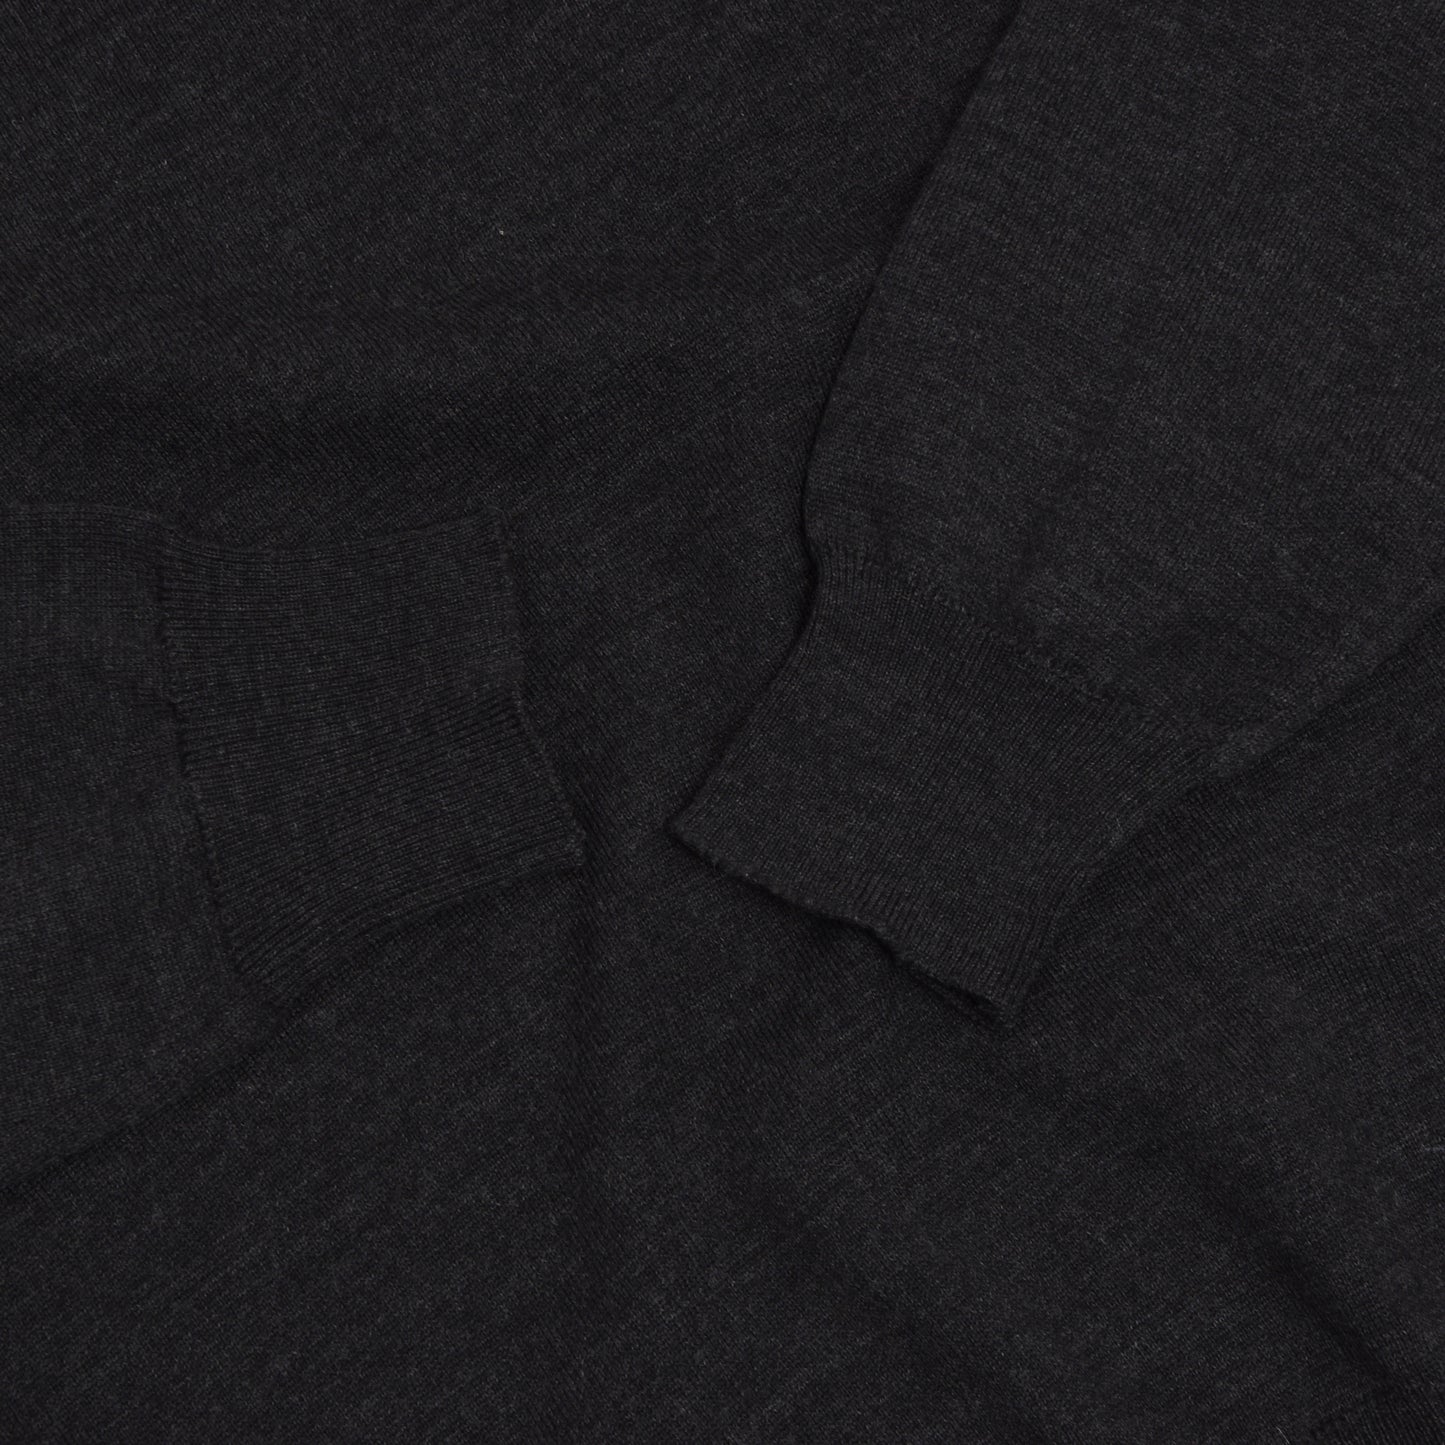 Burberry London Merino Wool Sweater Size M - Charcoal